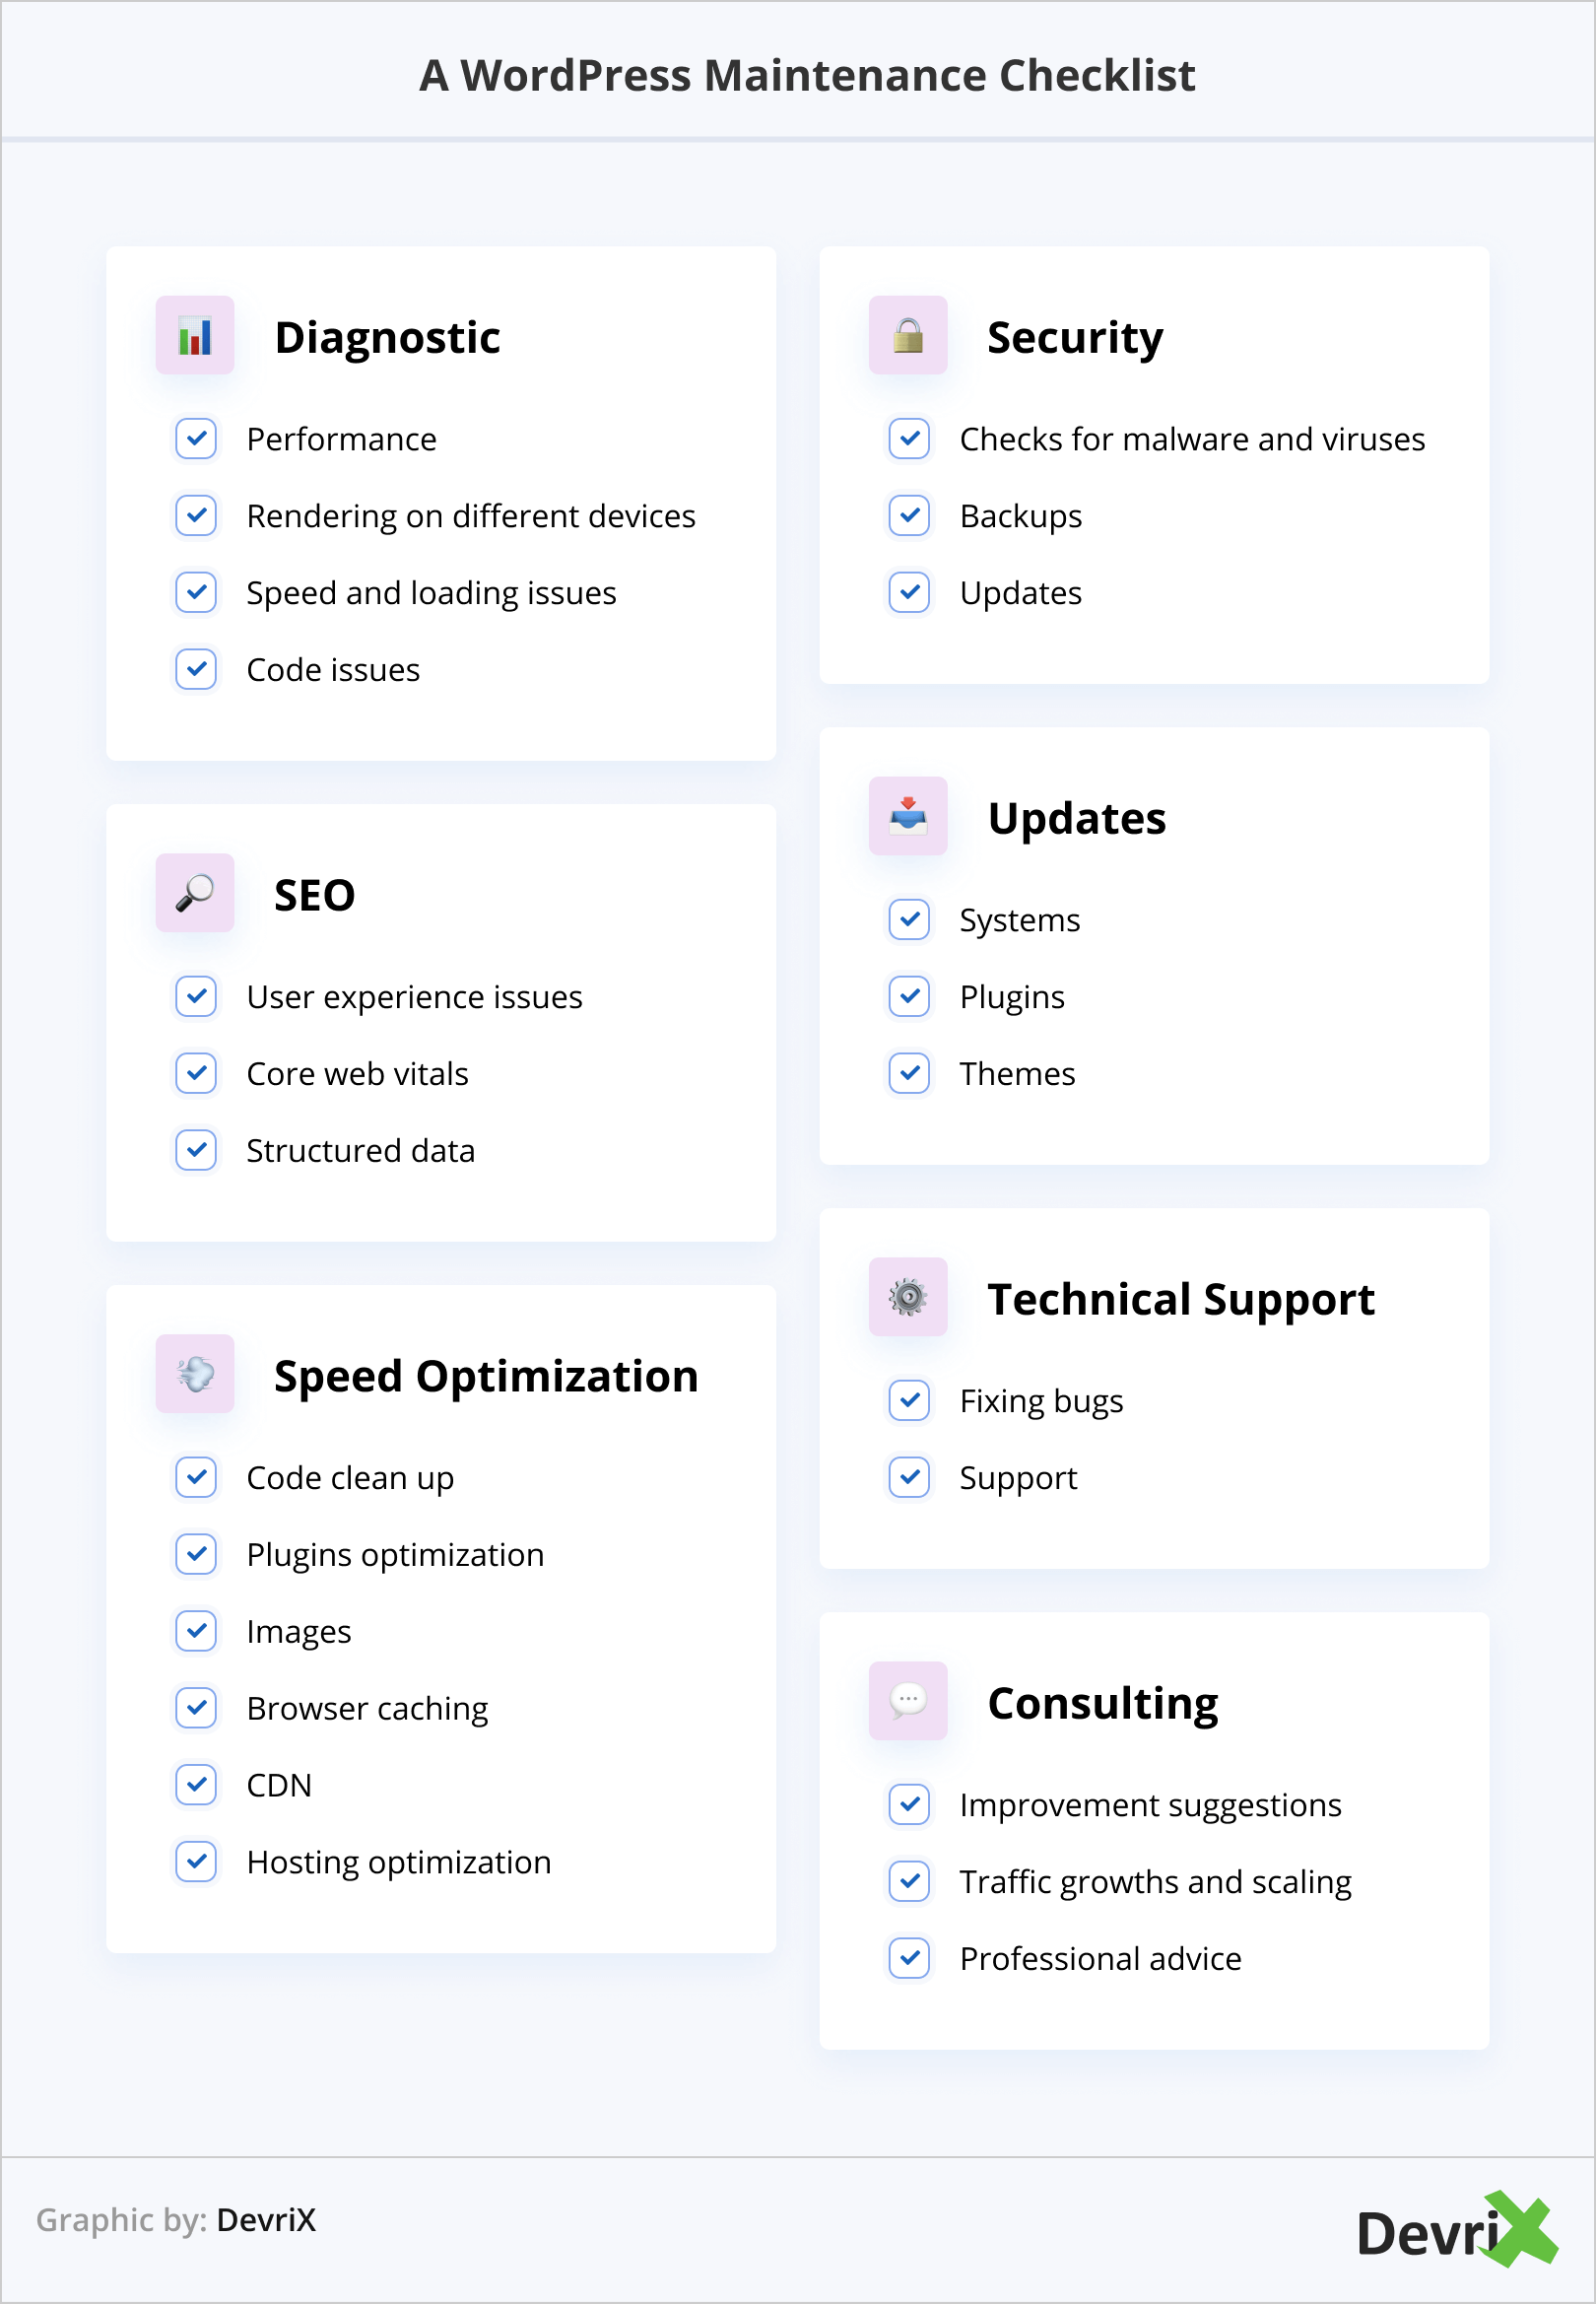 A WordPress Maintenance Checklist